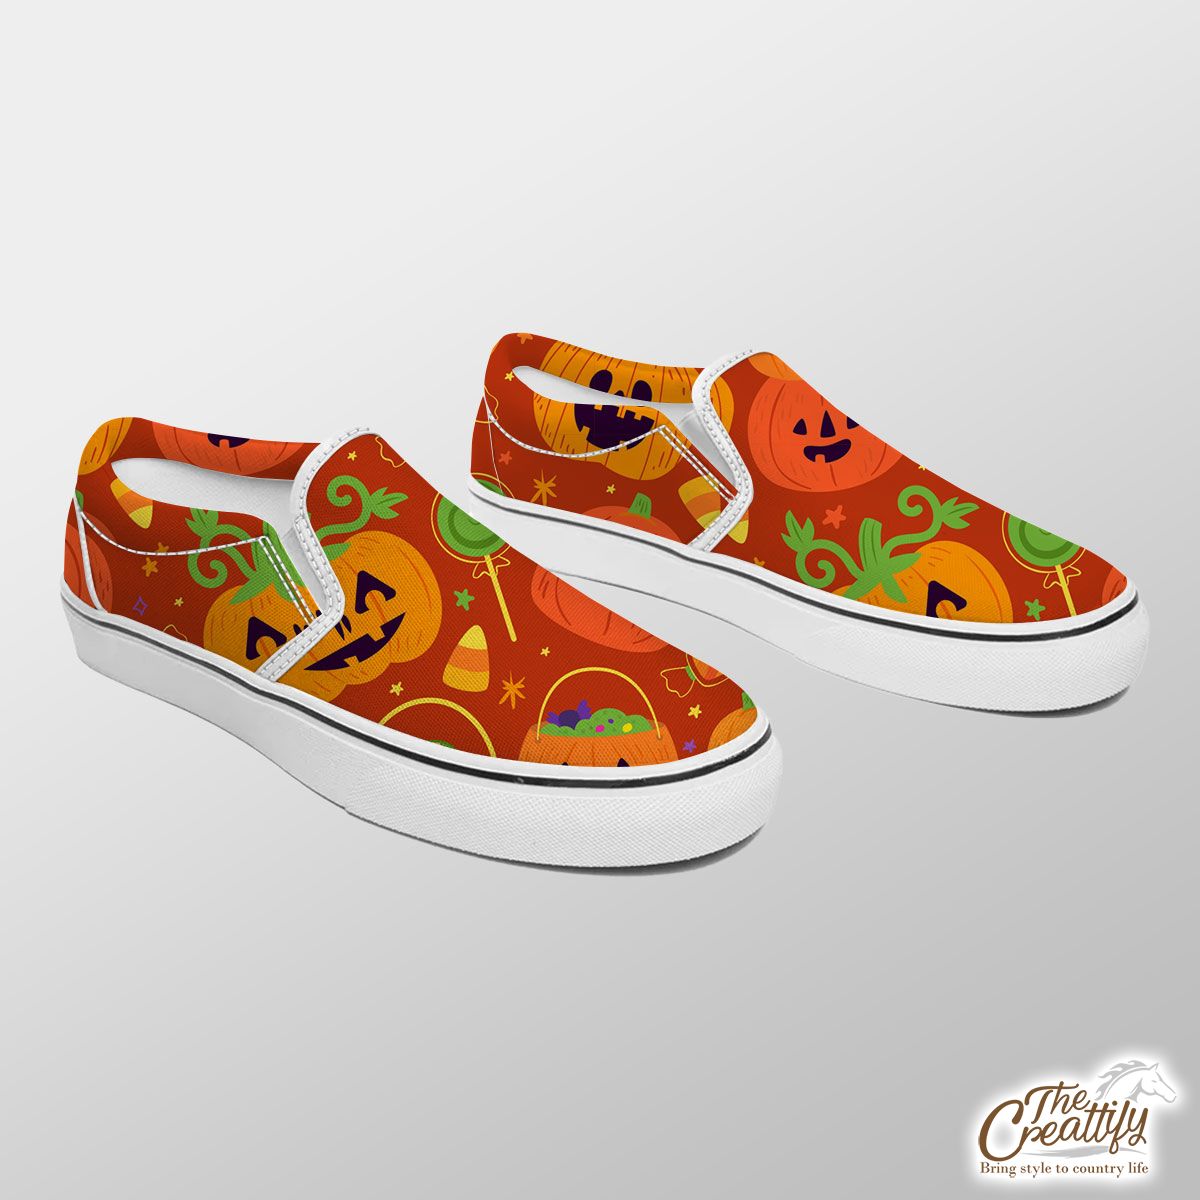 Cute Pumpkin, Jack O Lantern Full of Candy Orange Halloween Slip On Sneakers